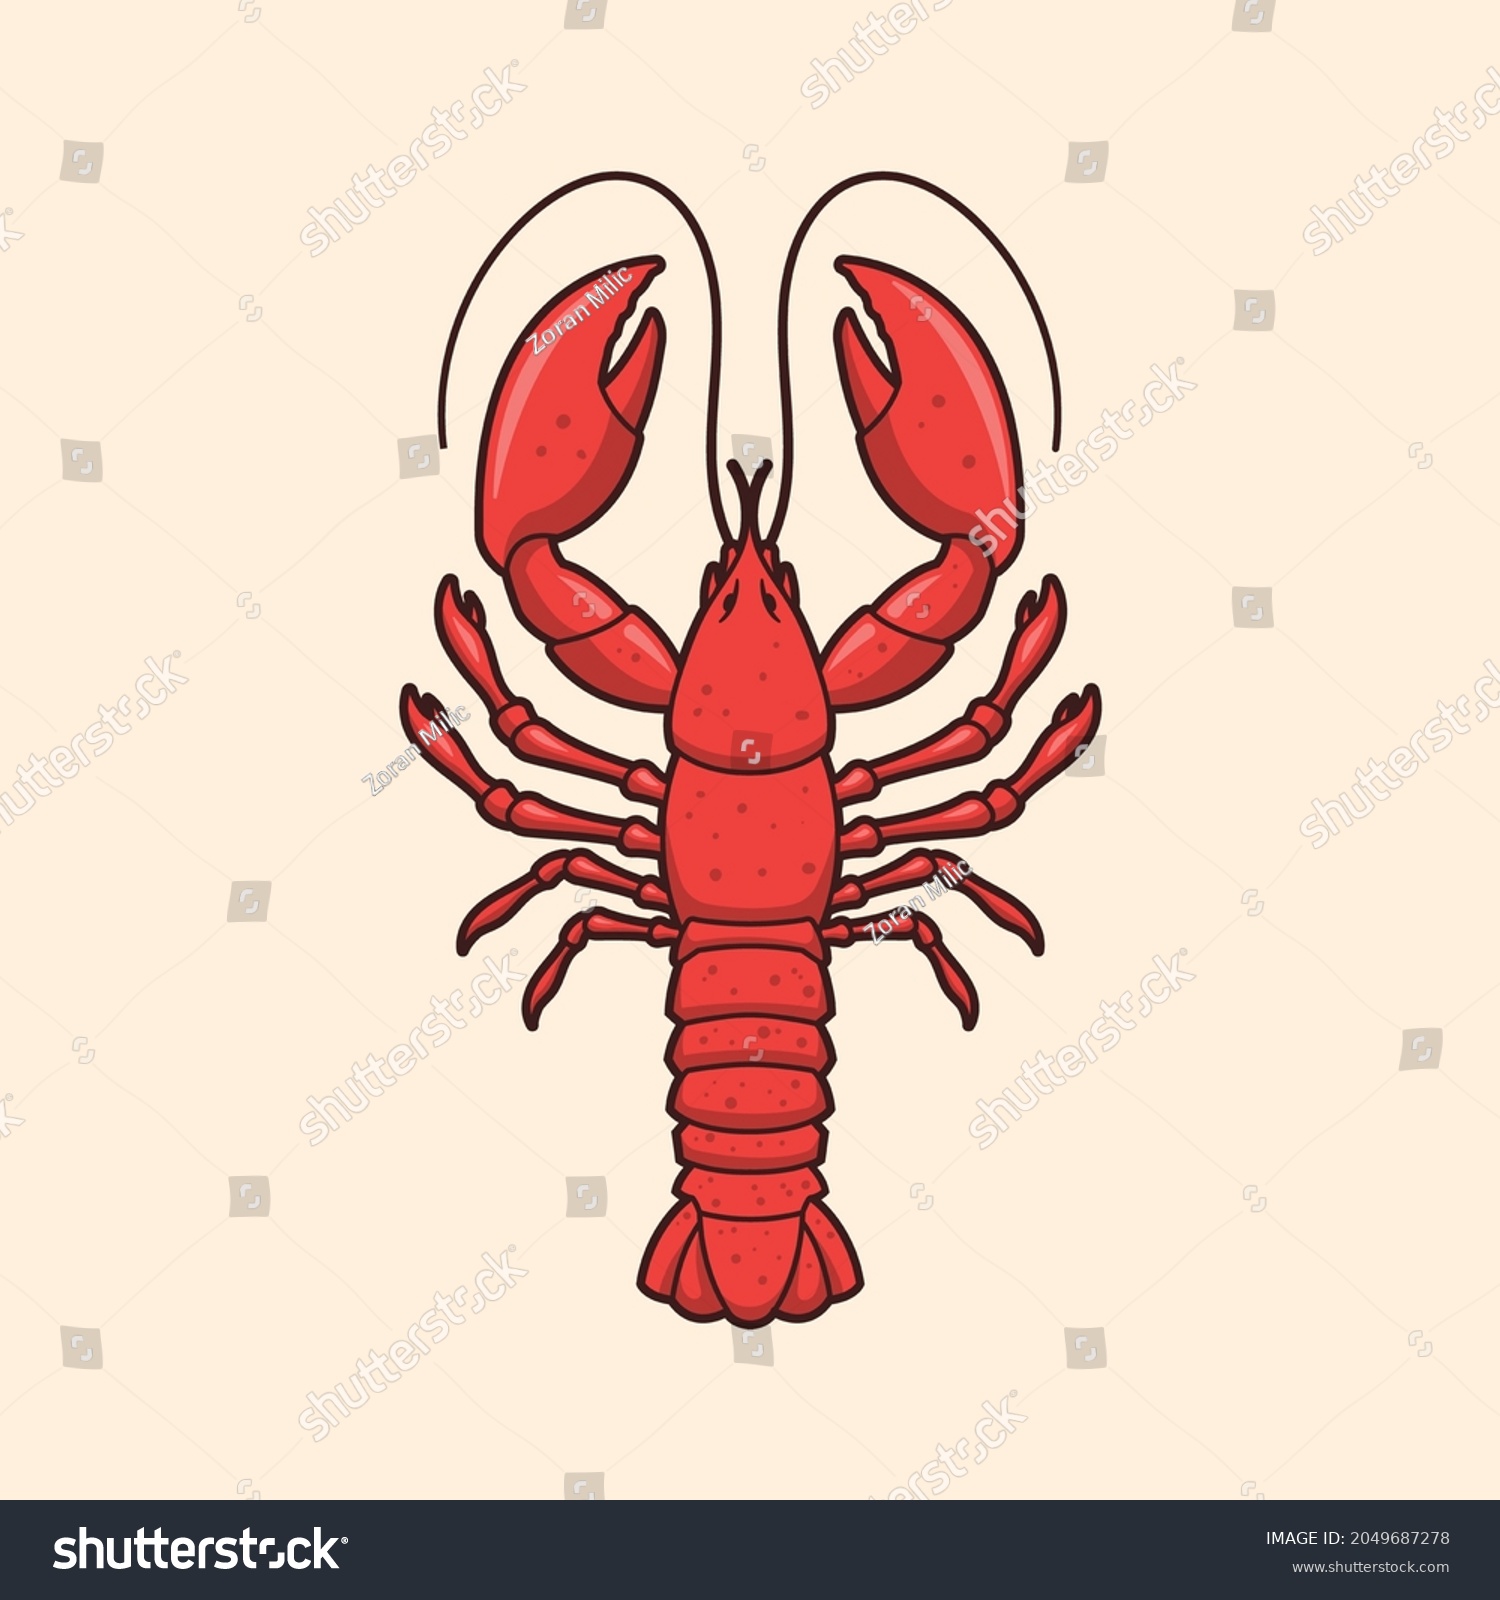 Red lobster drawing vector illustration #2049687278